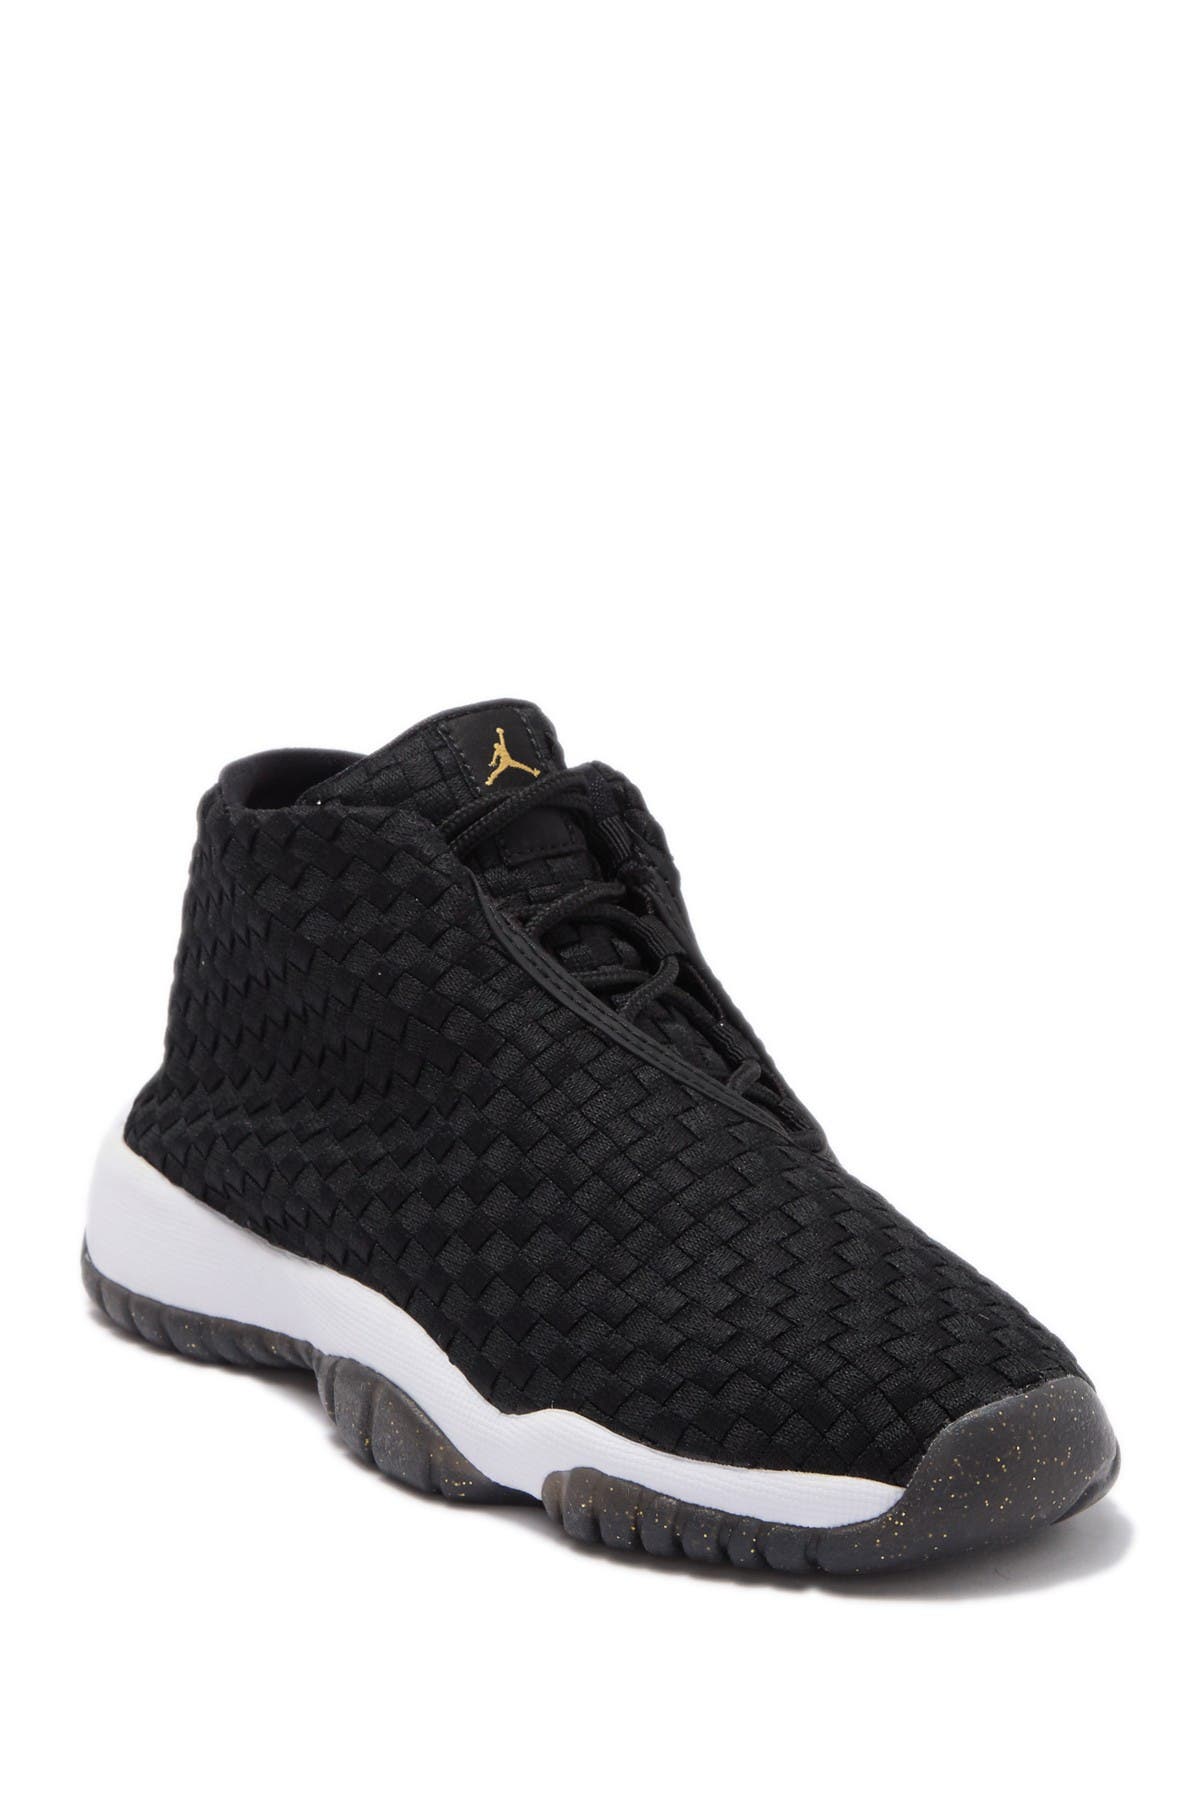 Nike | Air Jordan Future GS Sneaker 